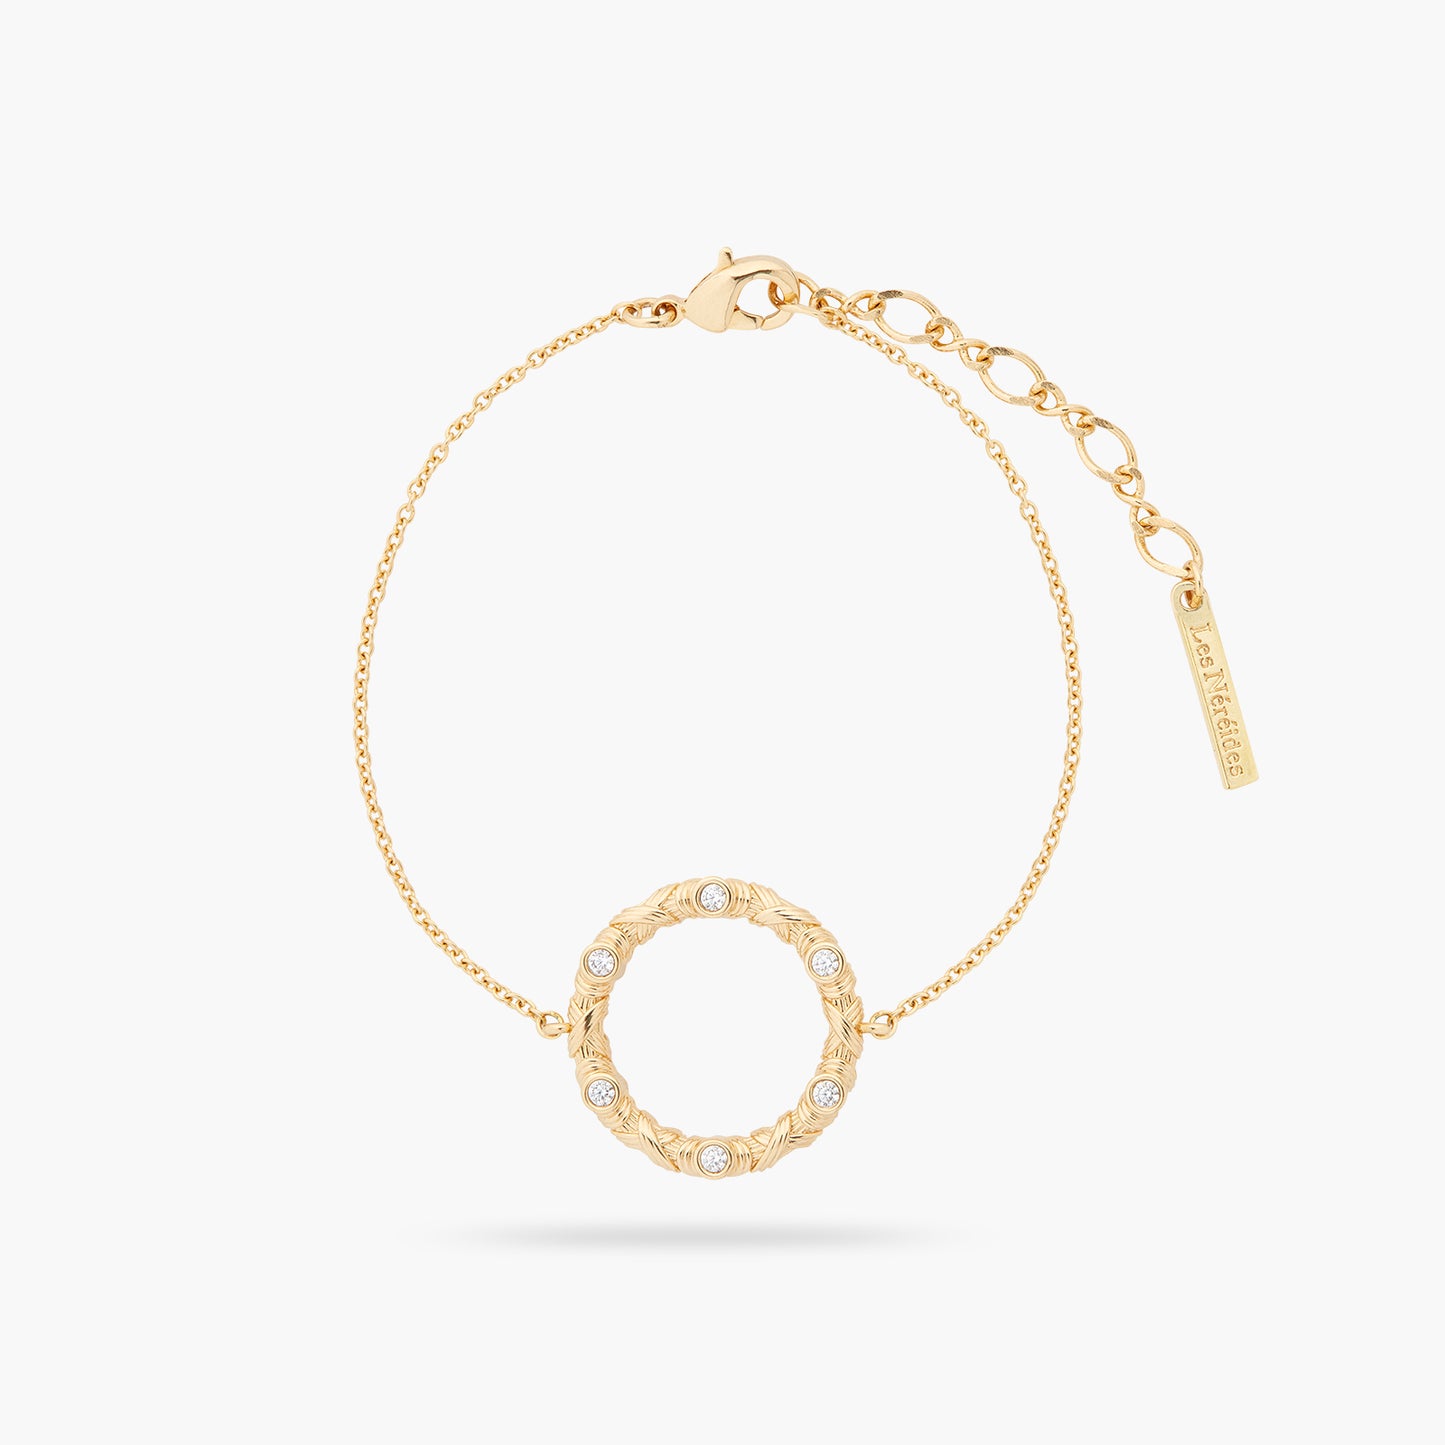 Woven basketry circle and crystal thin bracelet | ASVA2021